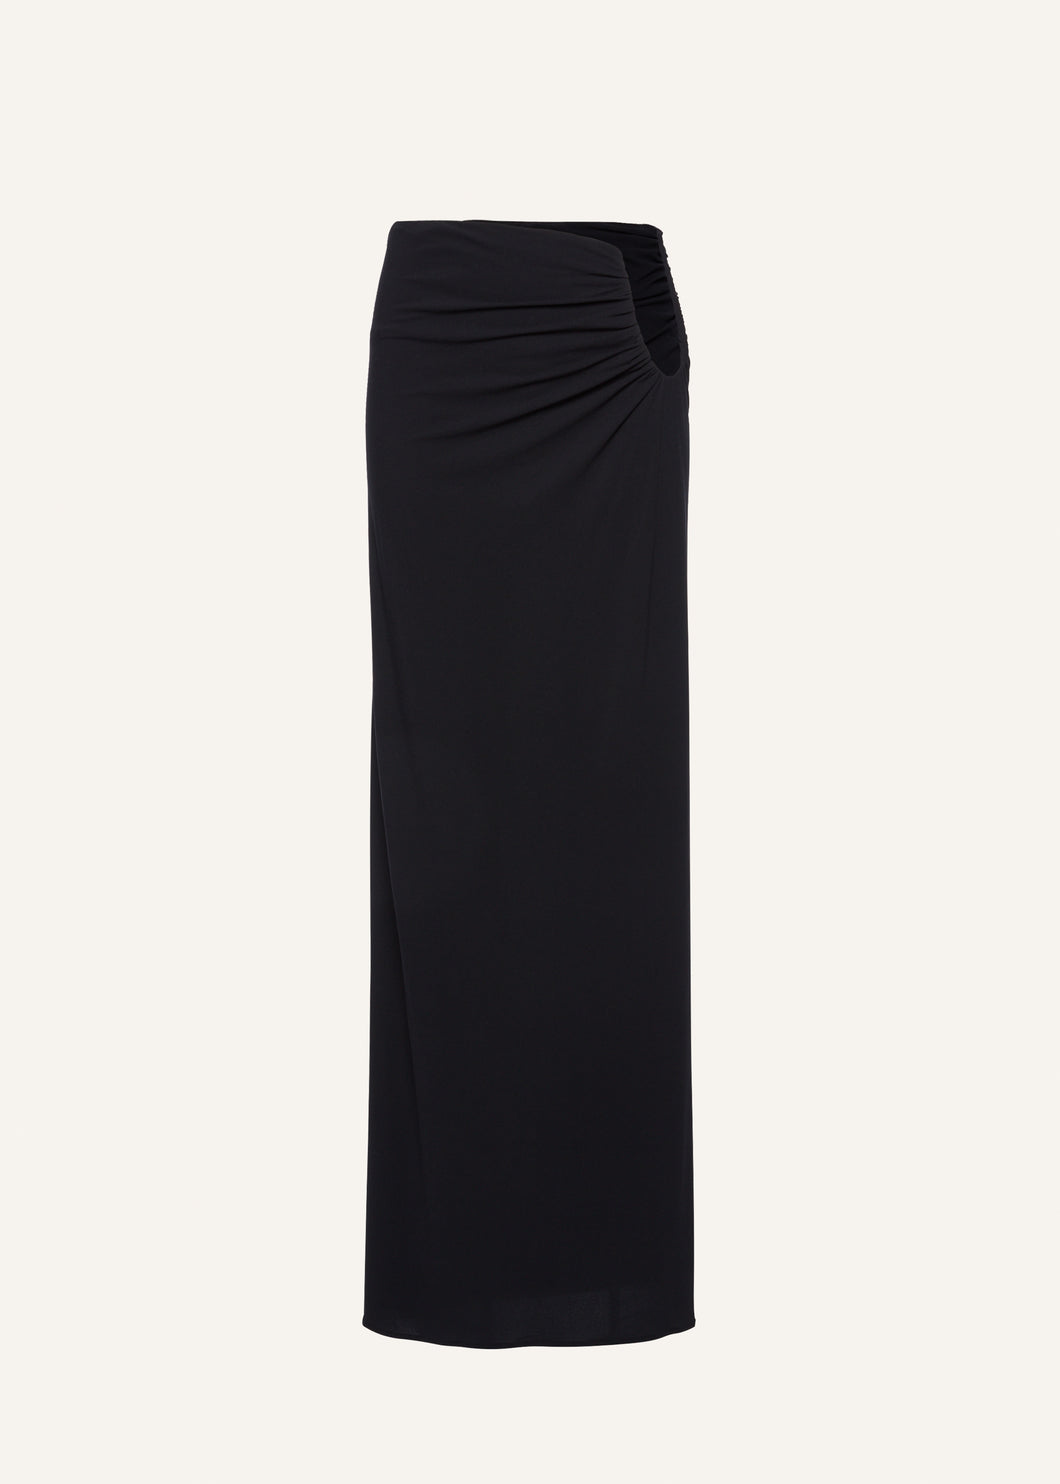 Hip plunge maxi skirt in black